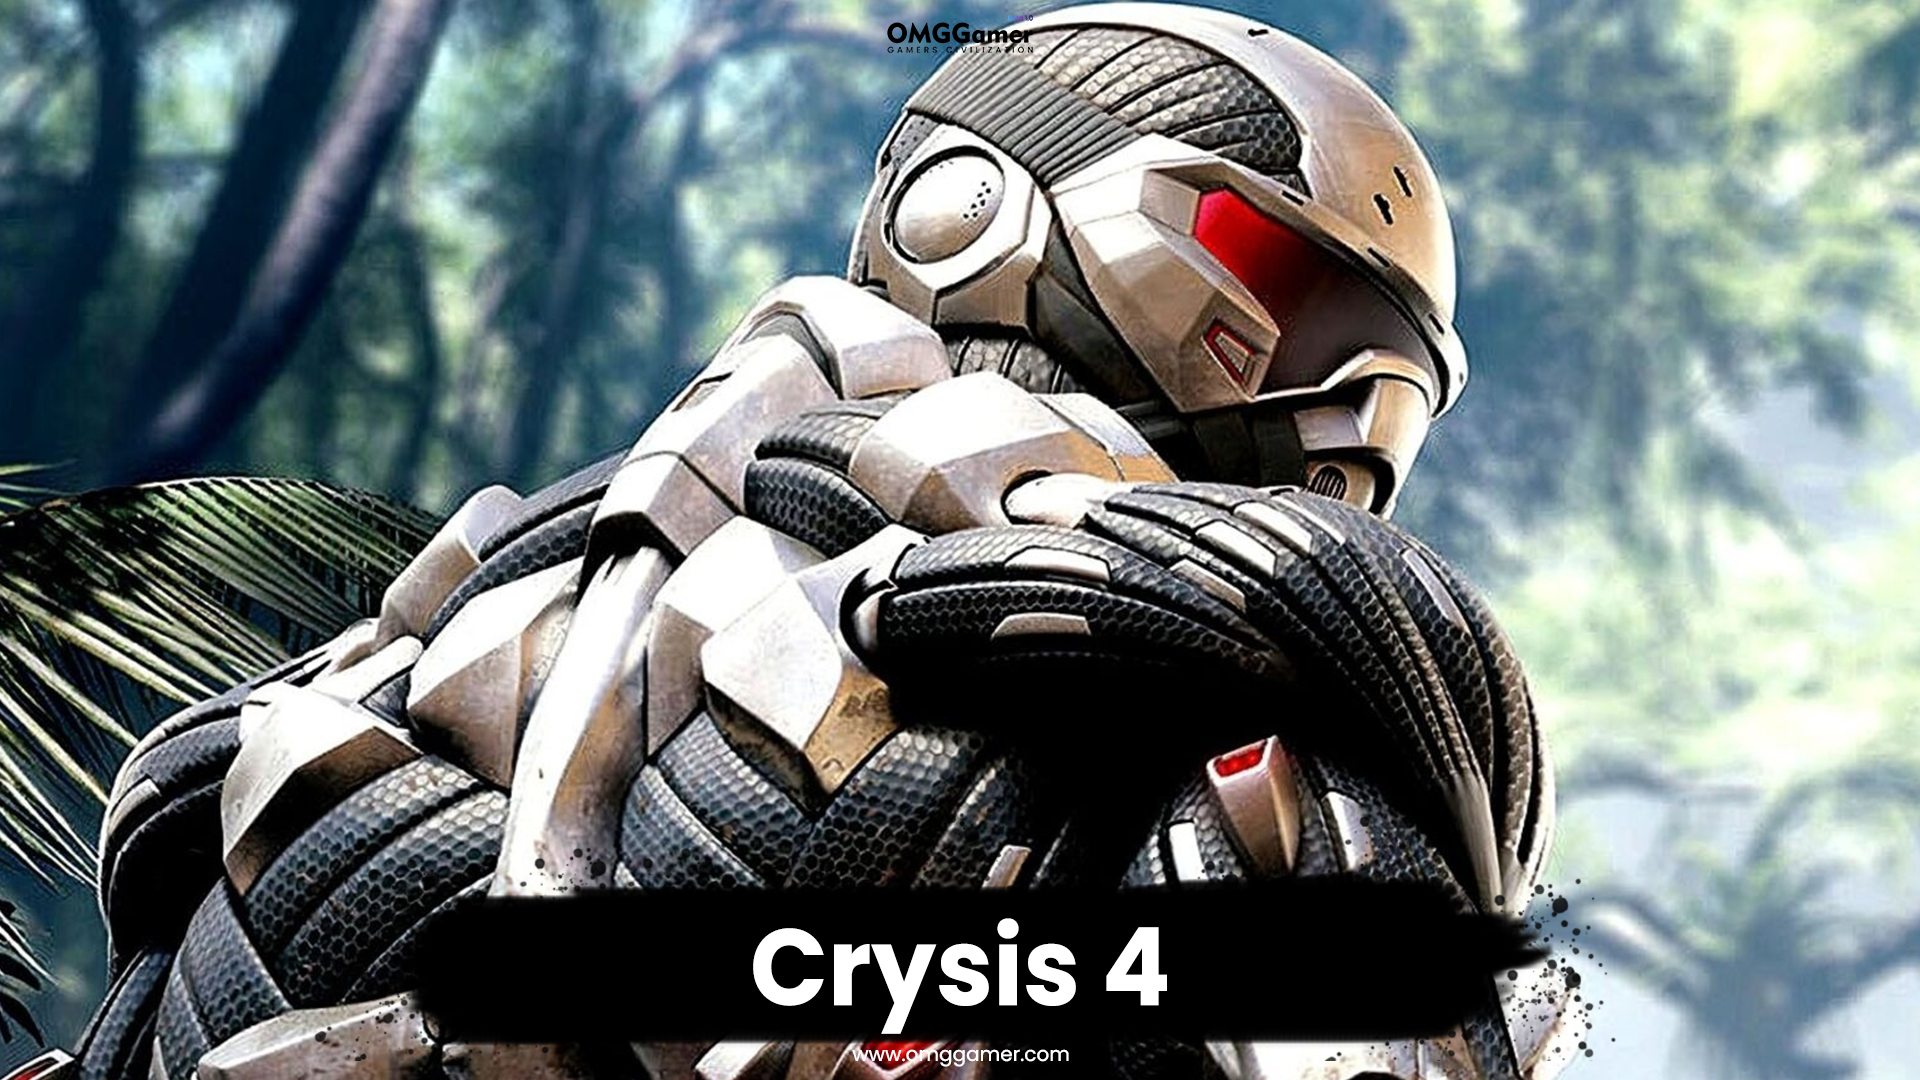 Crysis 4 Release Date, Trailer & Rumors 